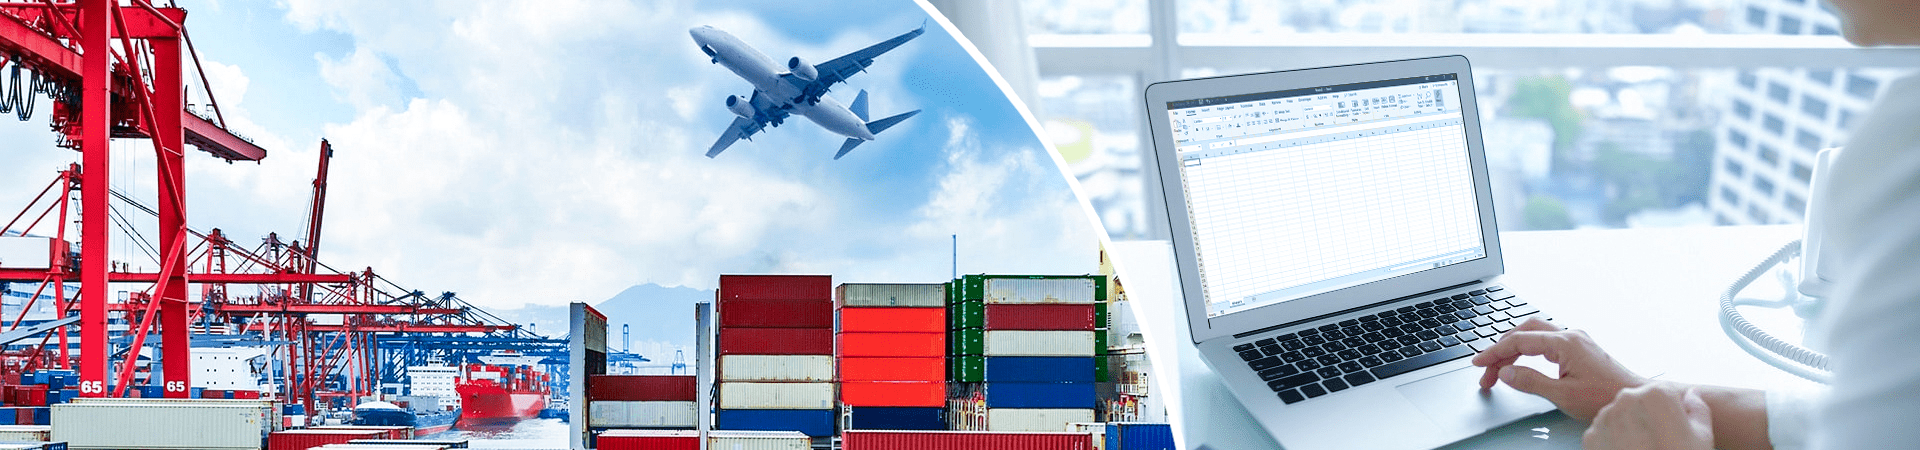 air-freight-logistics-bpo-service